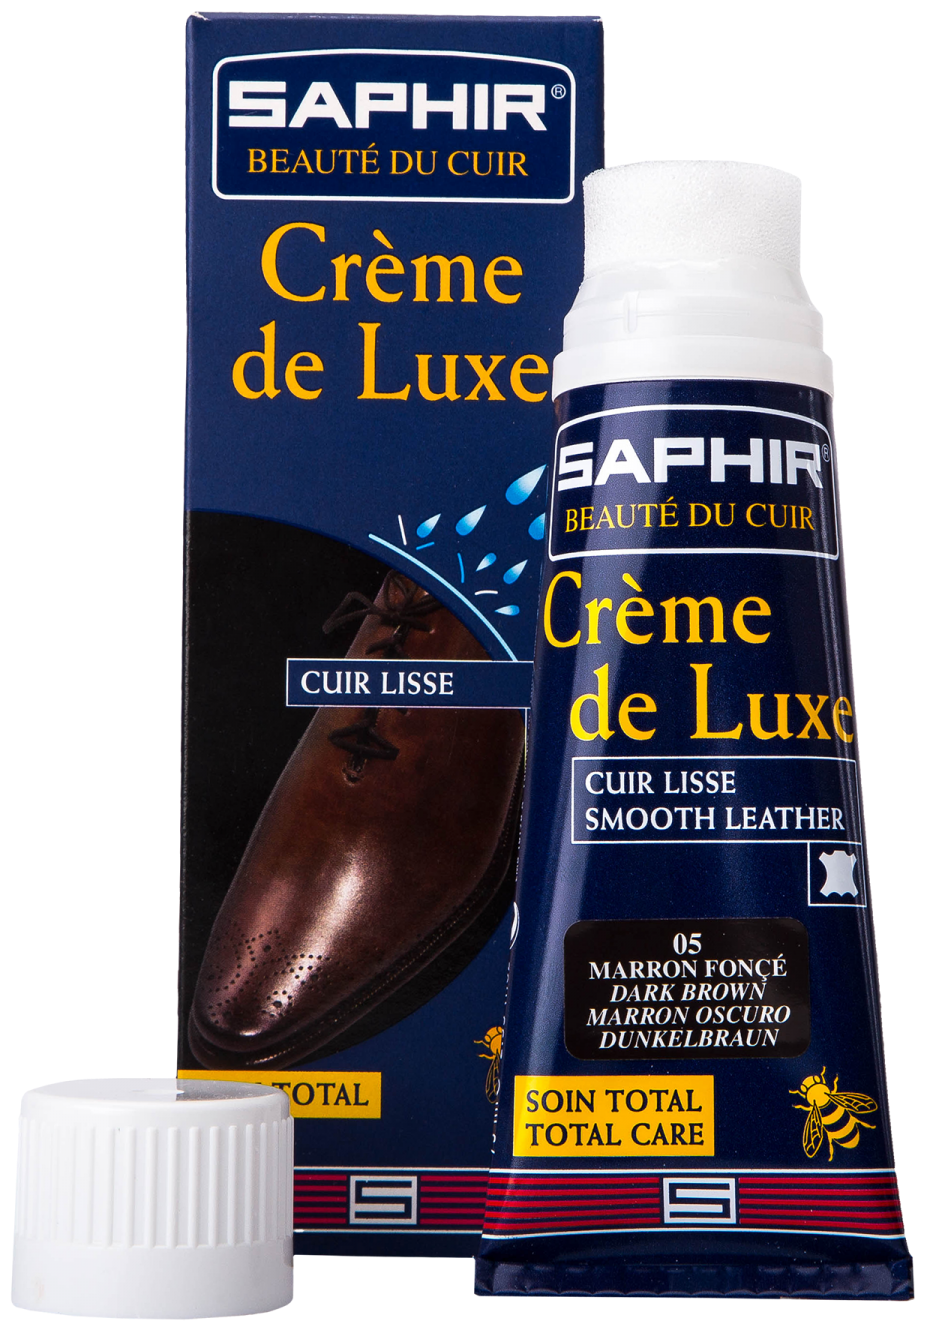 Saphir Крем Creme de Luxe 05 темно-коричневый, 75 мл